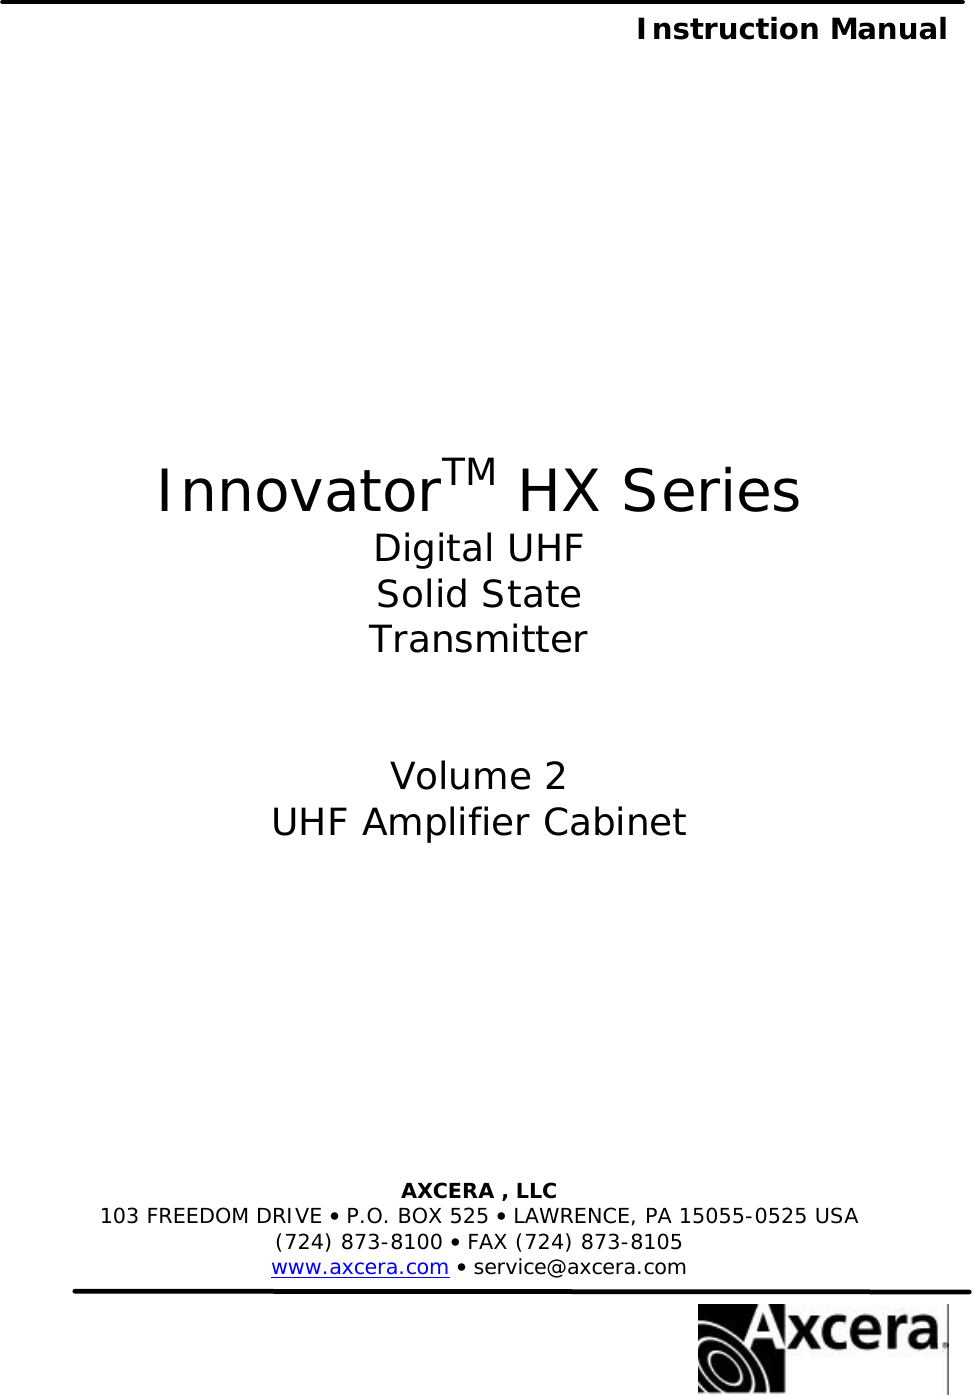  Instruction Manual                  InnovatorTM HX Series Digital UHF Solid State Transmitter   Volume 2 UHF Amplifier Cabinet            AXCERA , LLC 103 FREEDOM DRIVE • P.O. BOX 525 • LAWRENCE, PA 15055-0525 USA (724) 873-8100 • FAX (724) 873-8105 www.axcera.com • service@axcera.com   